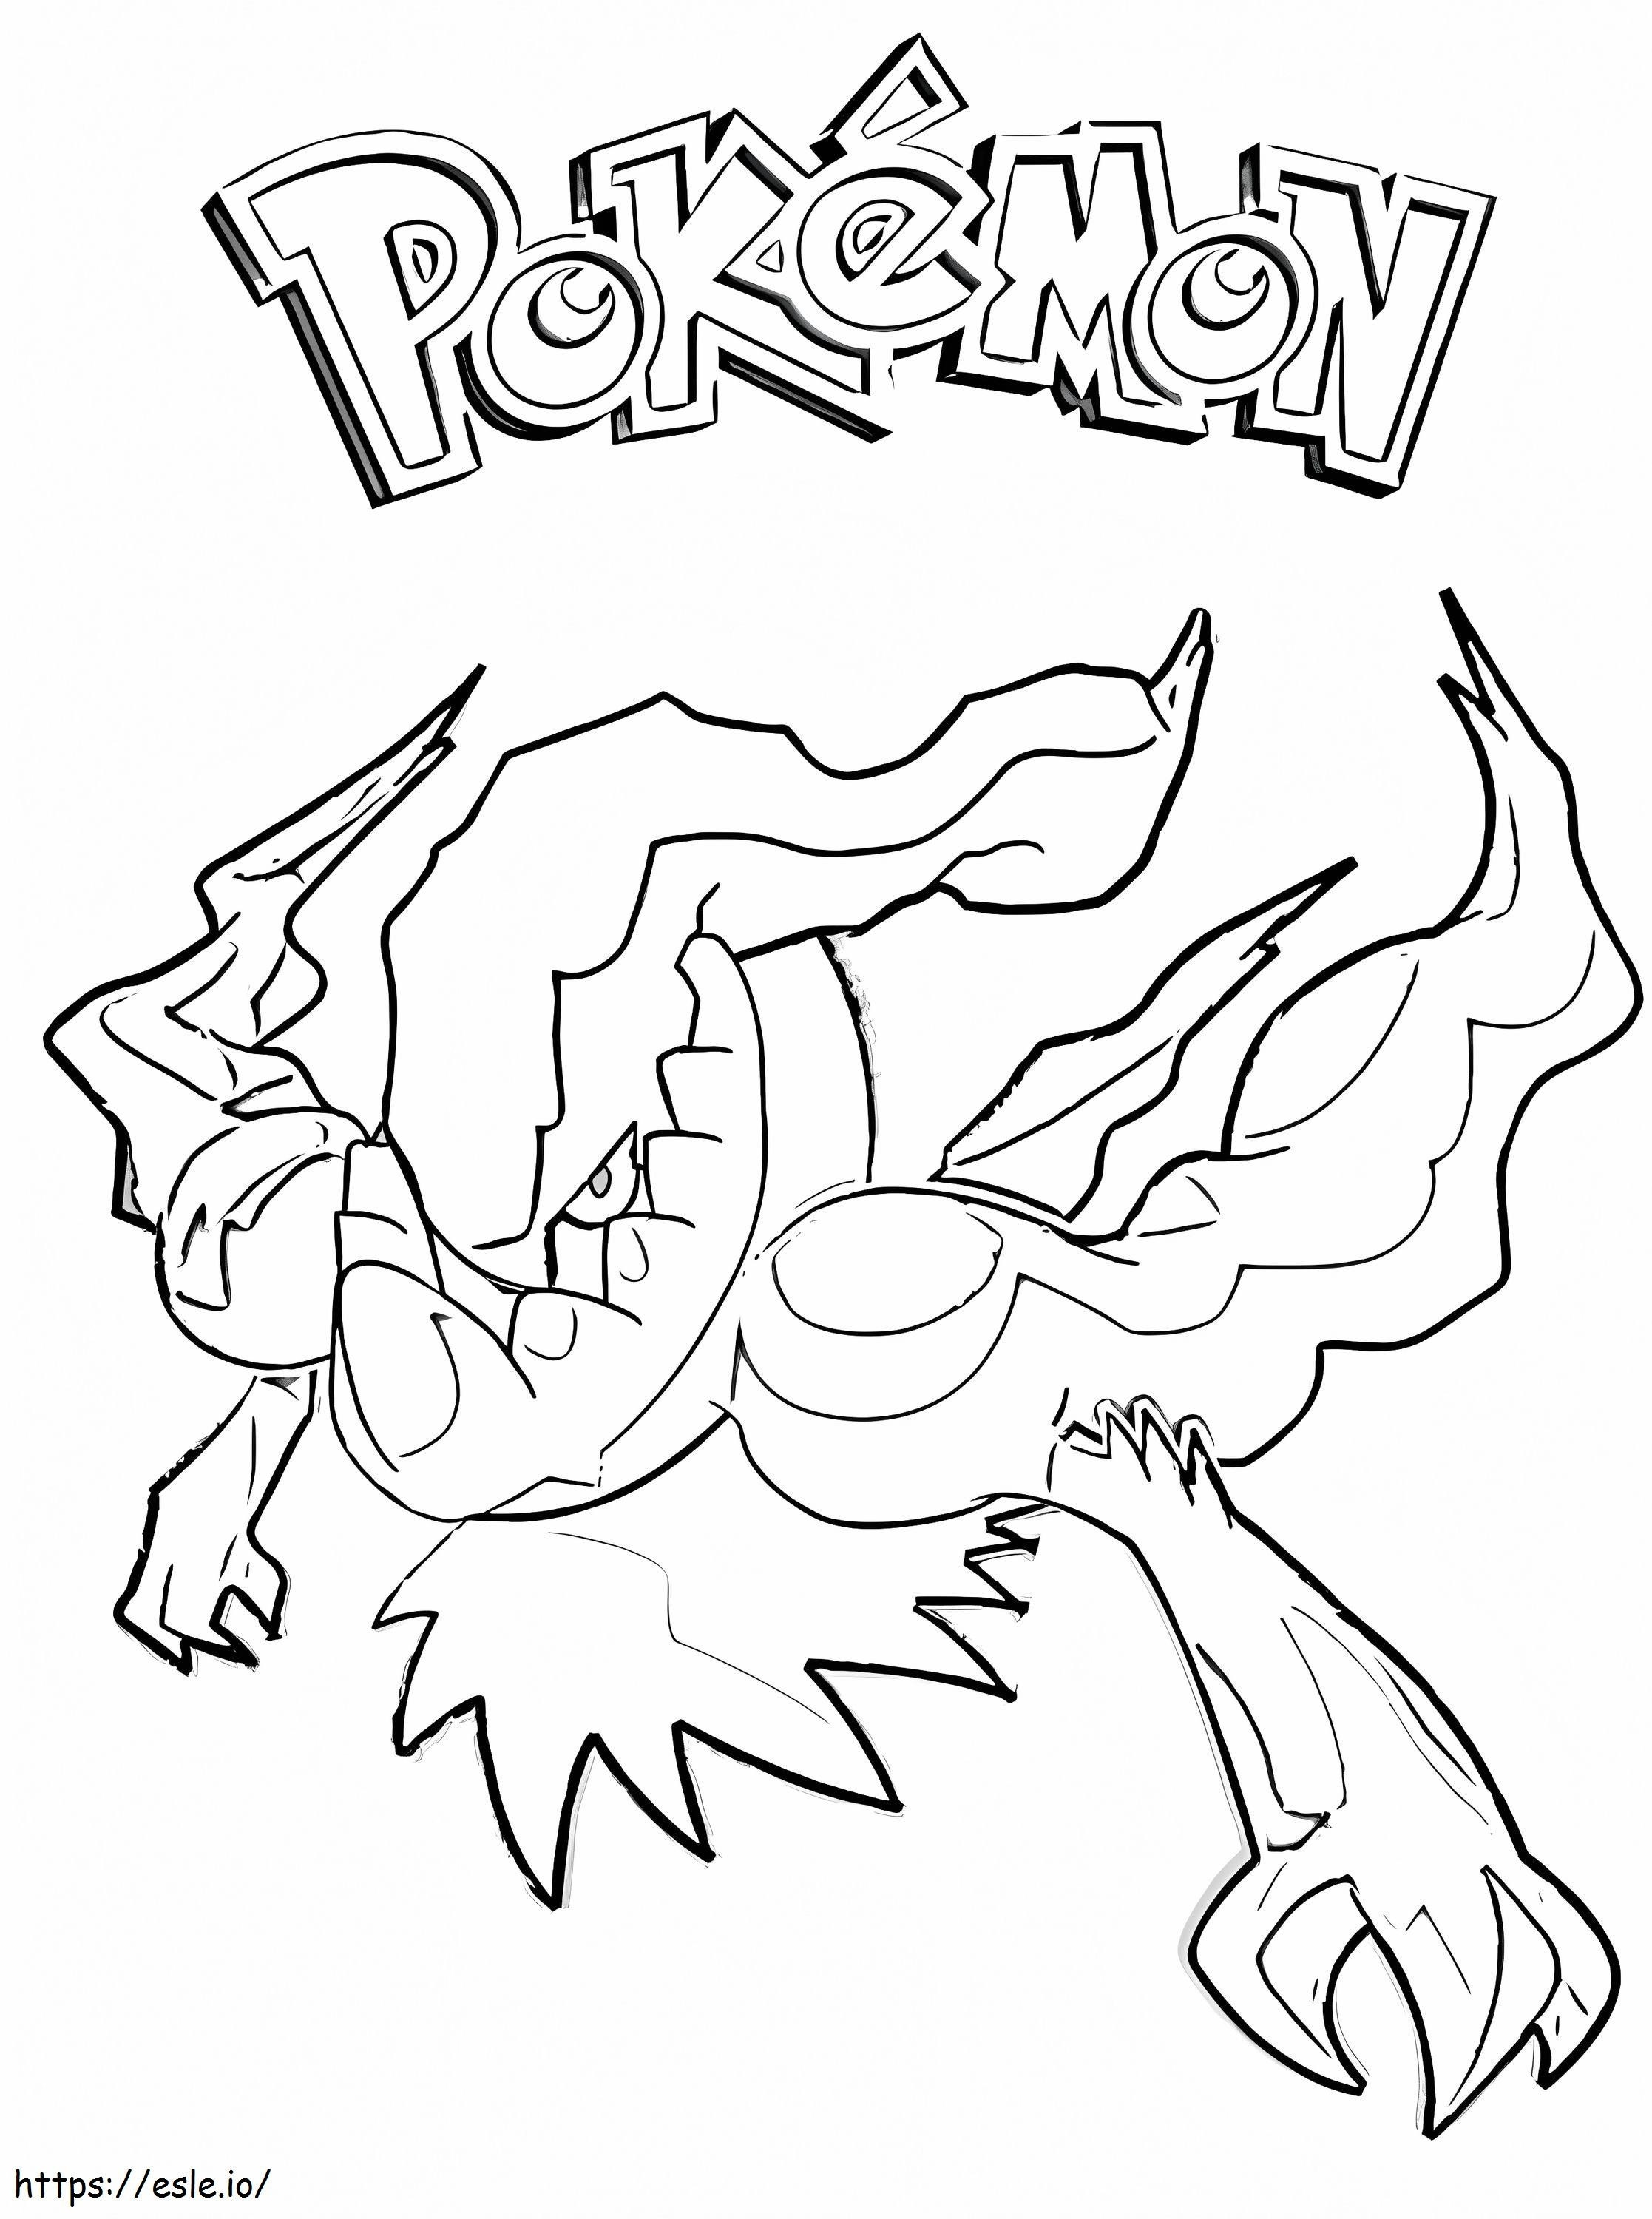 Darkrai Pokemon Cartoon coloring page